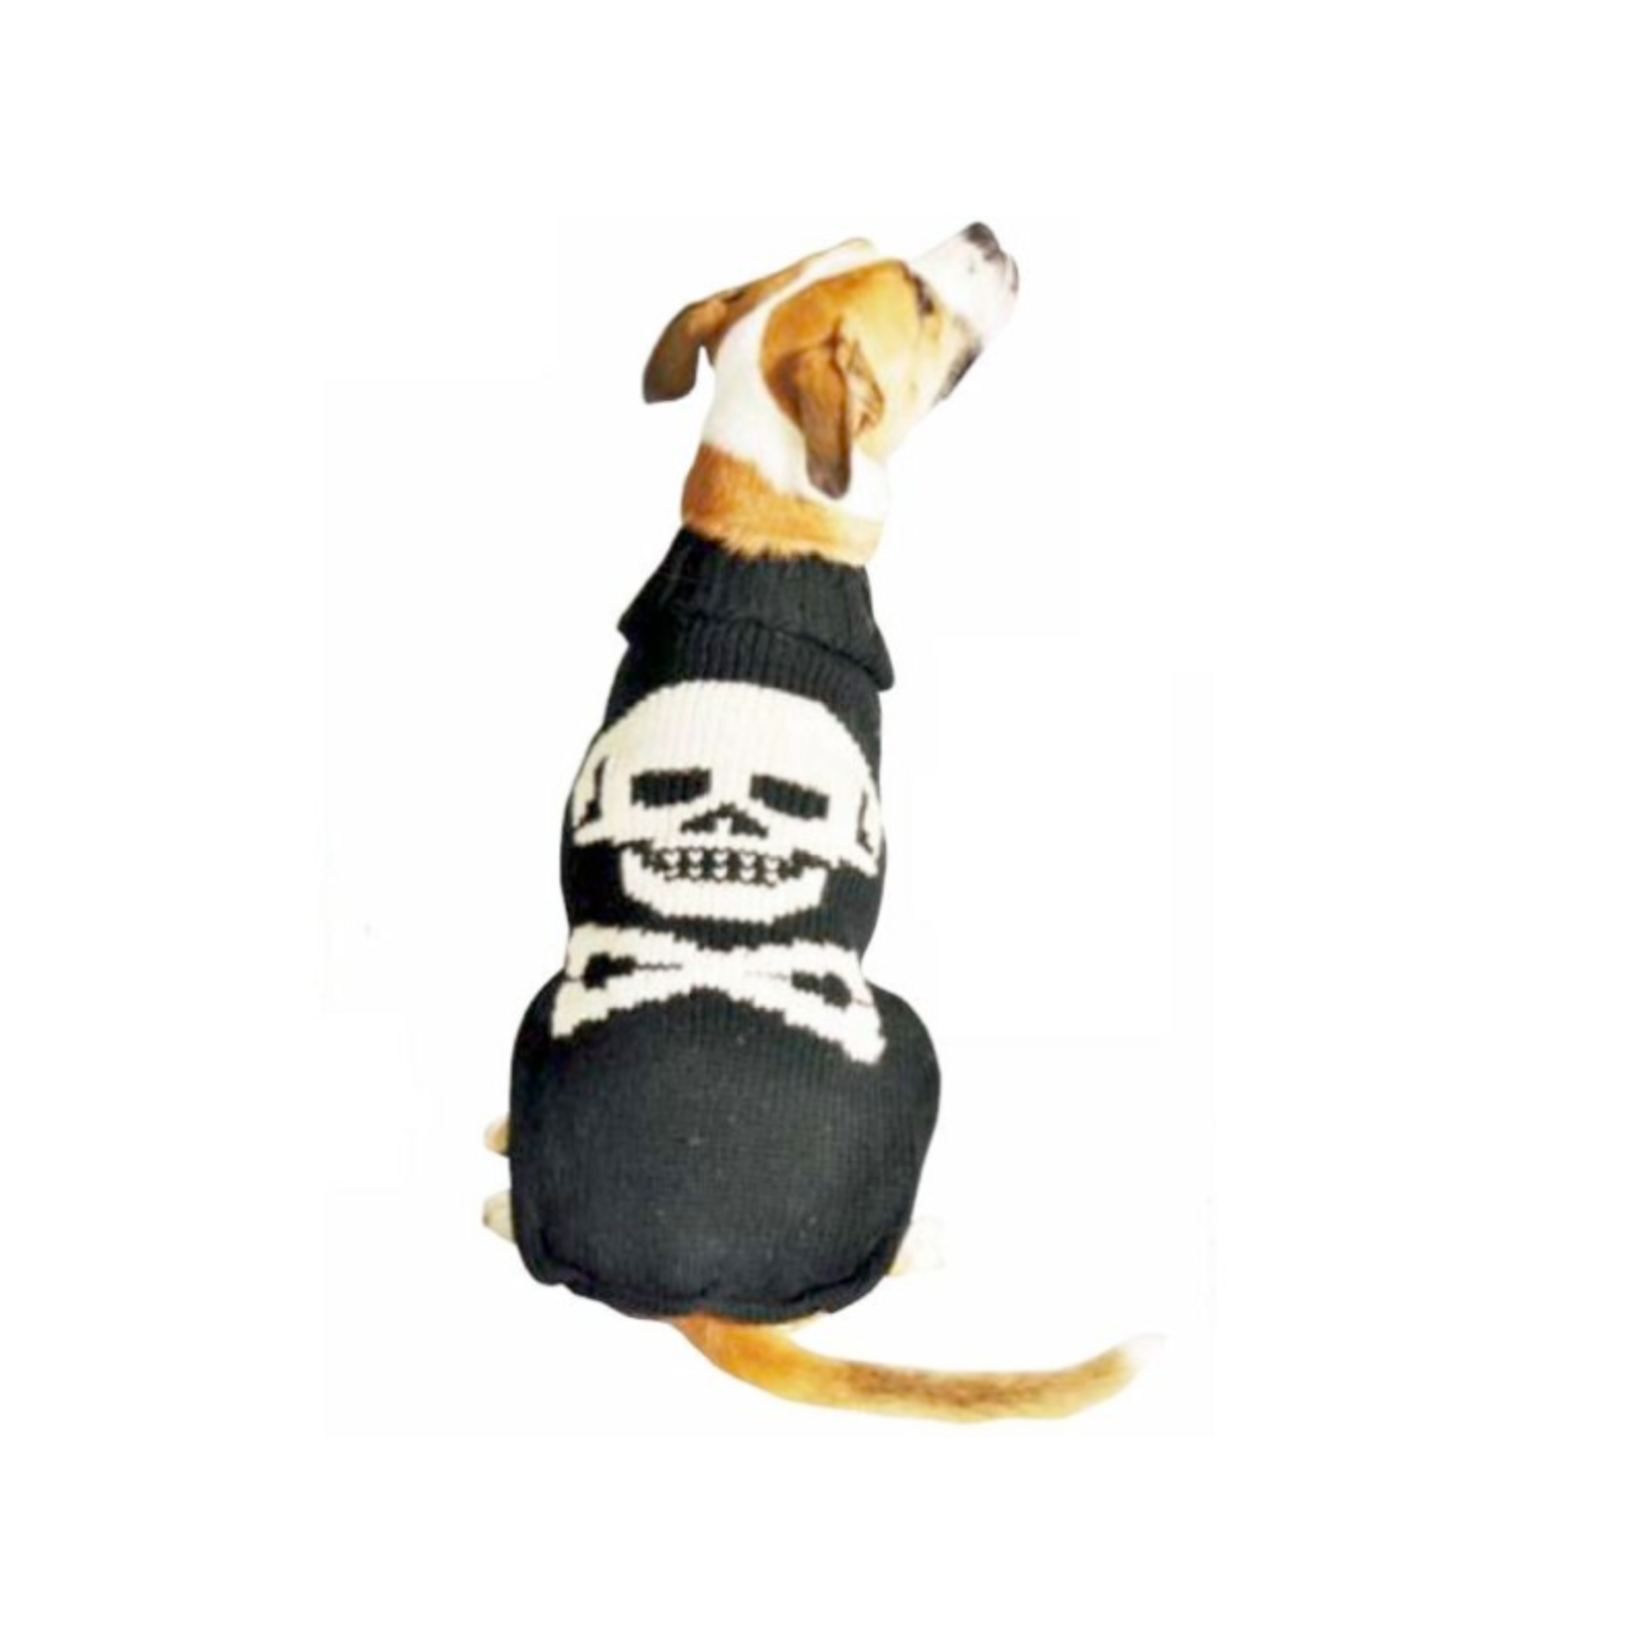 Chilly Dog Skull - Black & White - 100% Wool - Dog Sweater - Chilly Dog